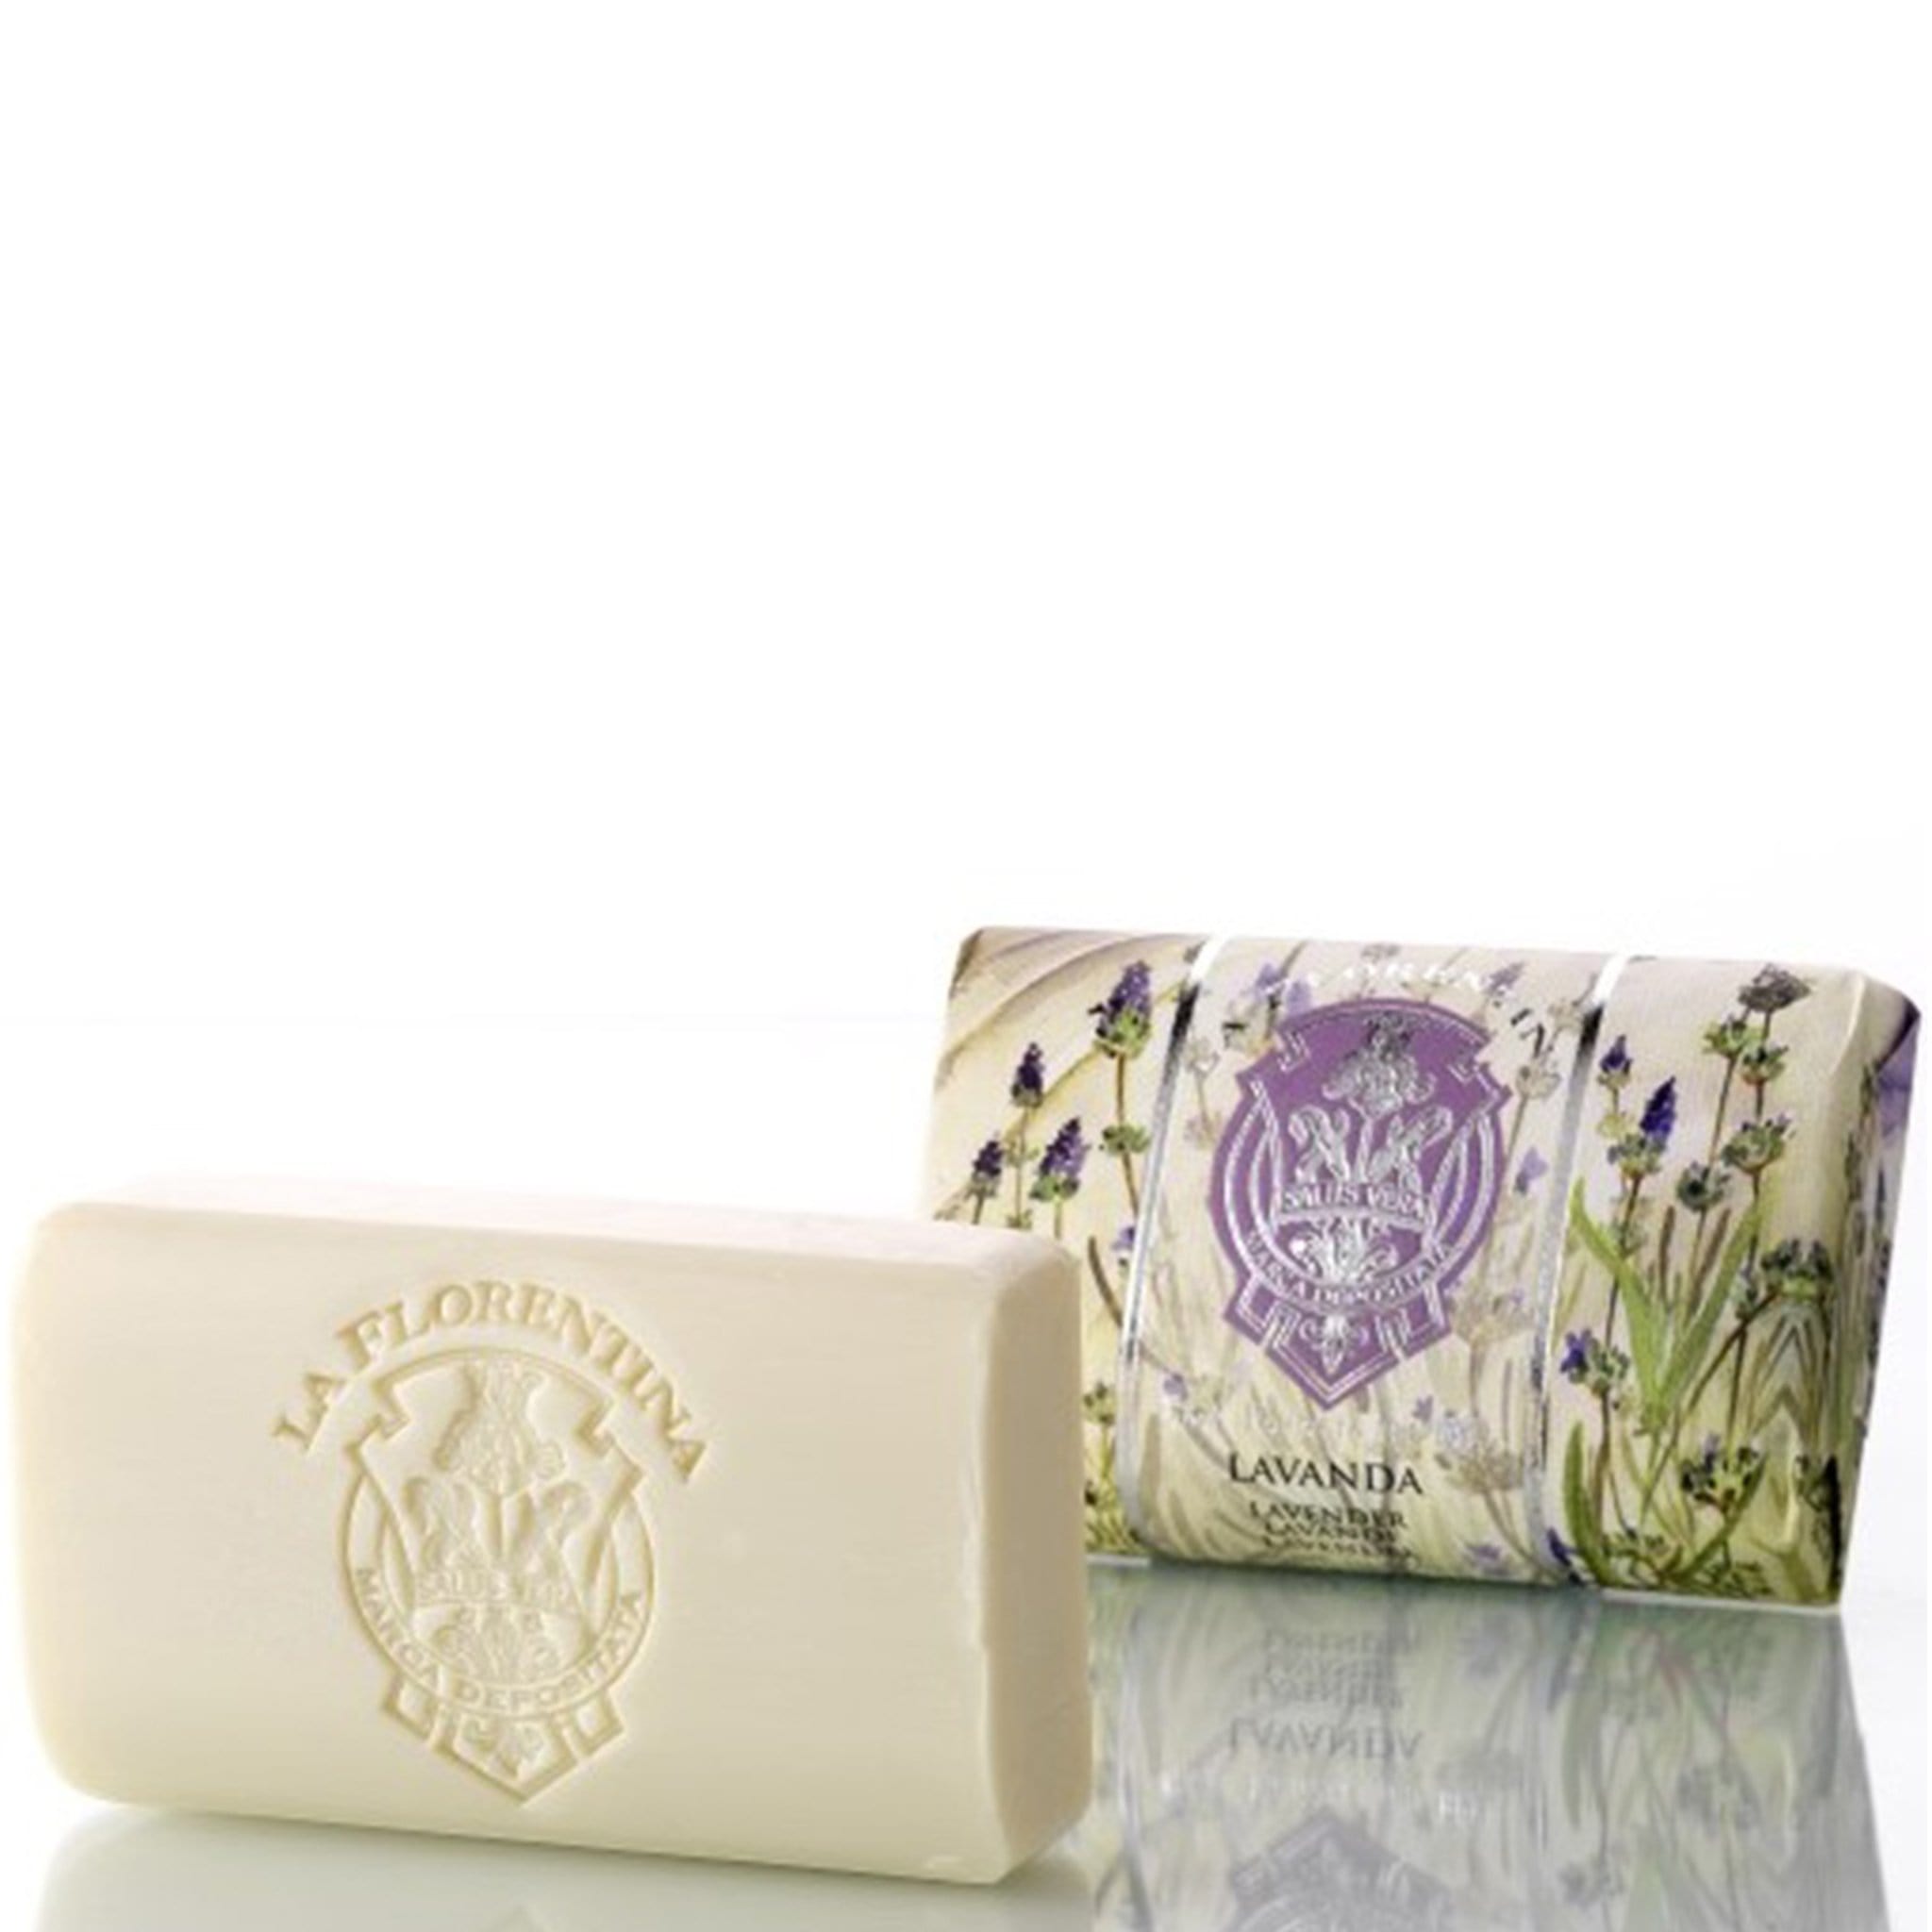 Italian Luxury Group 200g Bar Soap La Florentina Lavender Bar soap 200g Brand